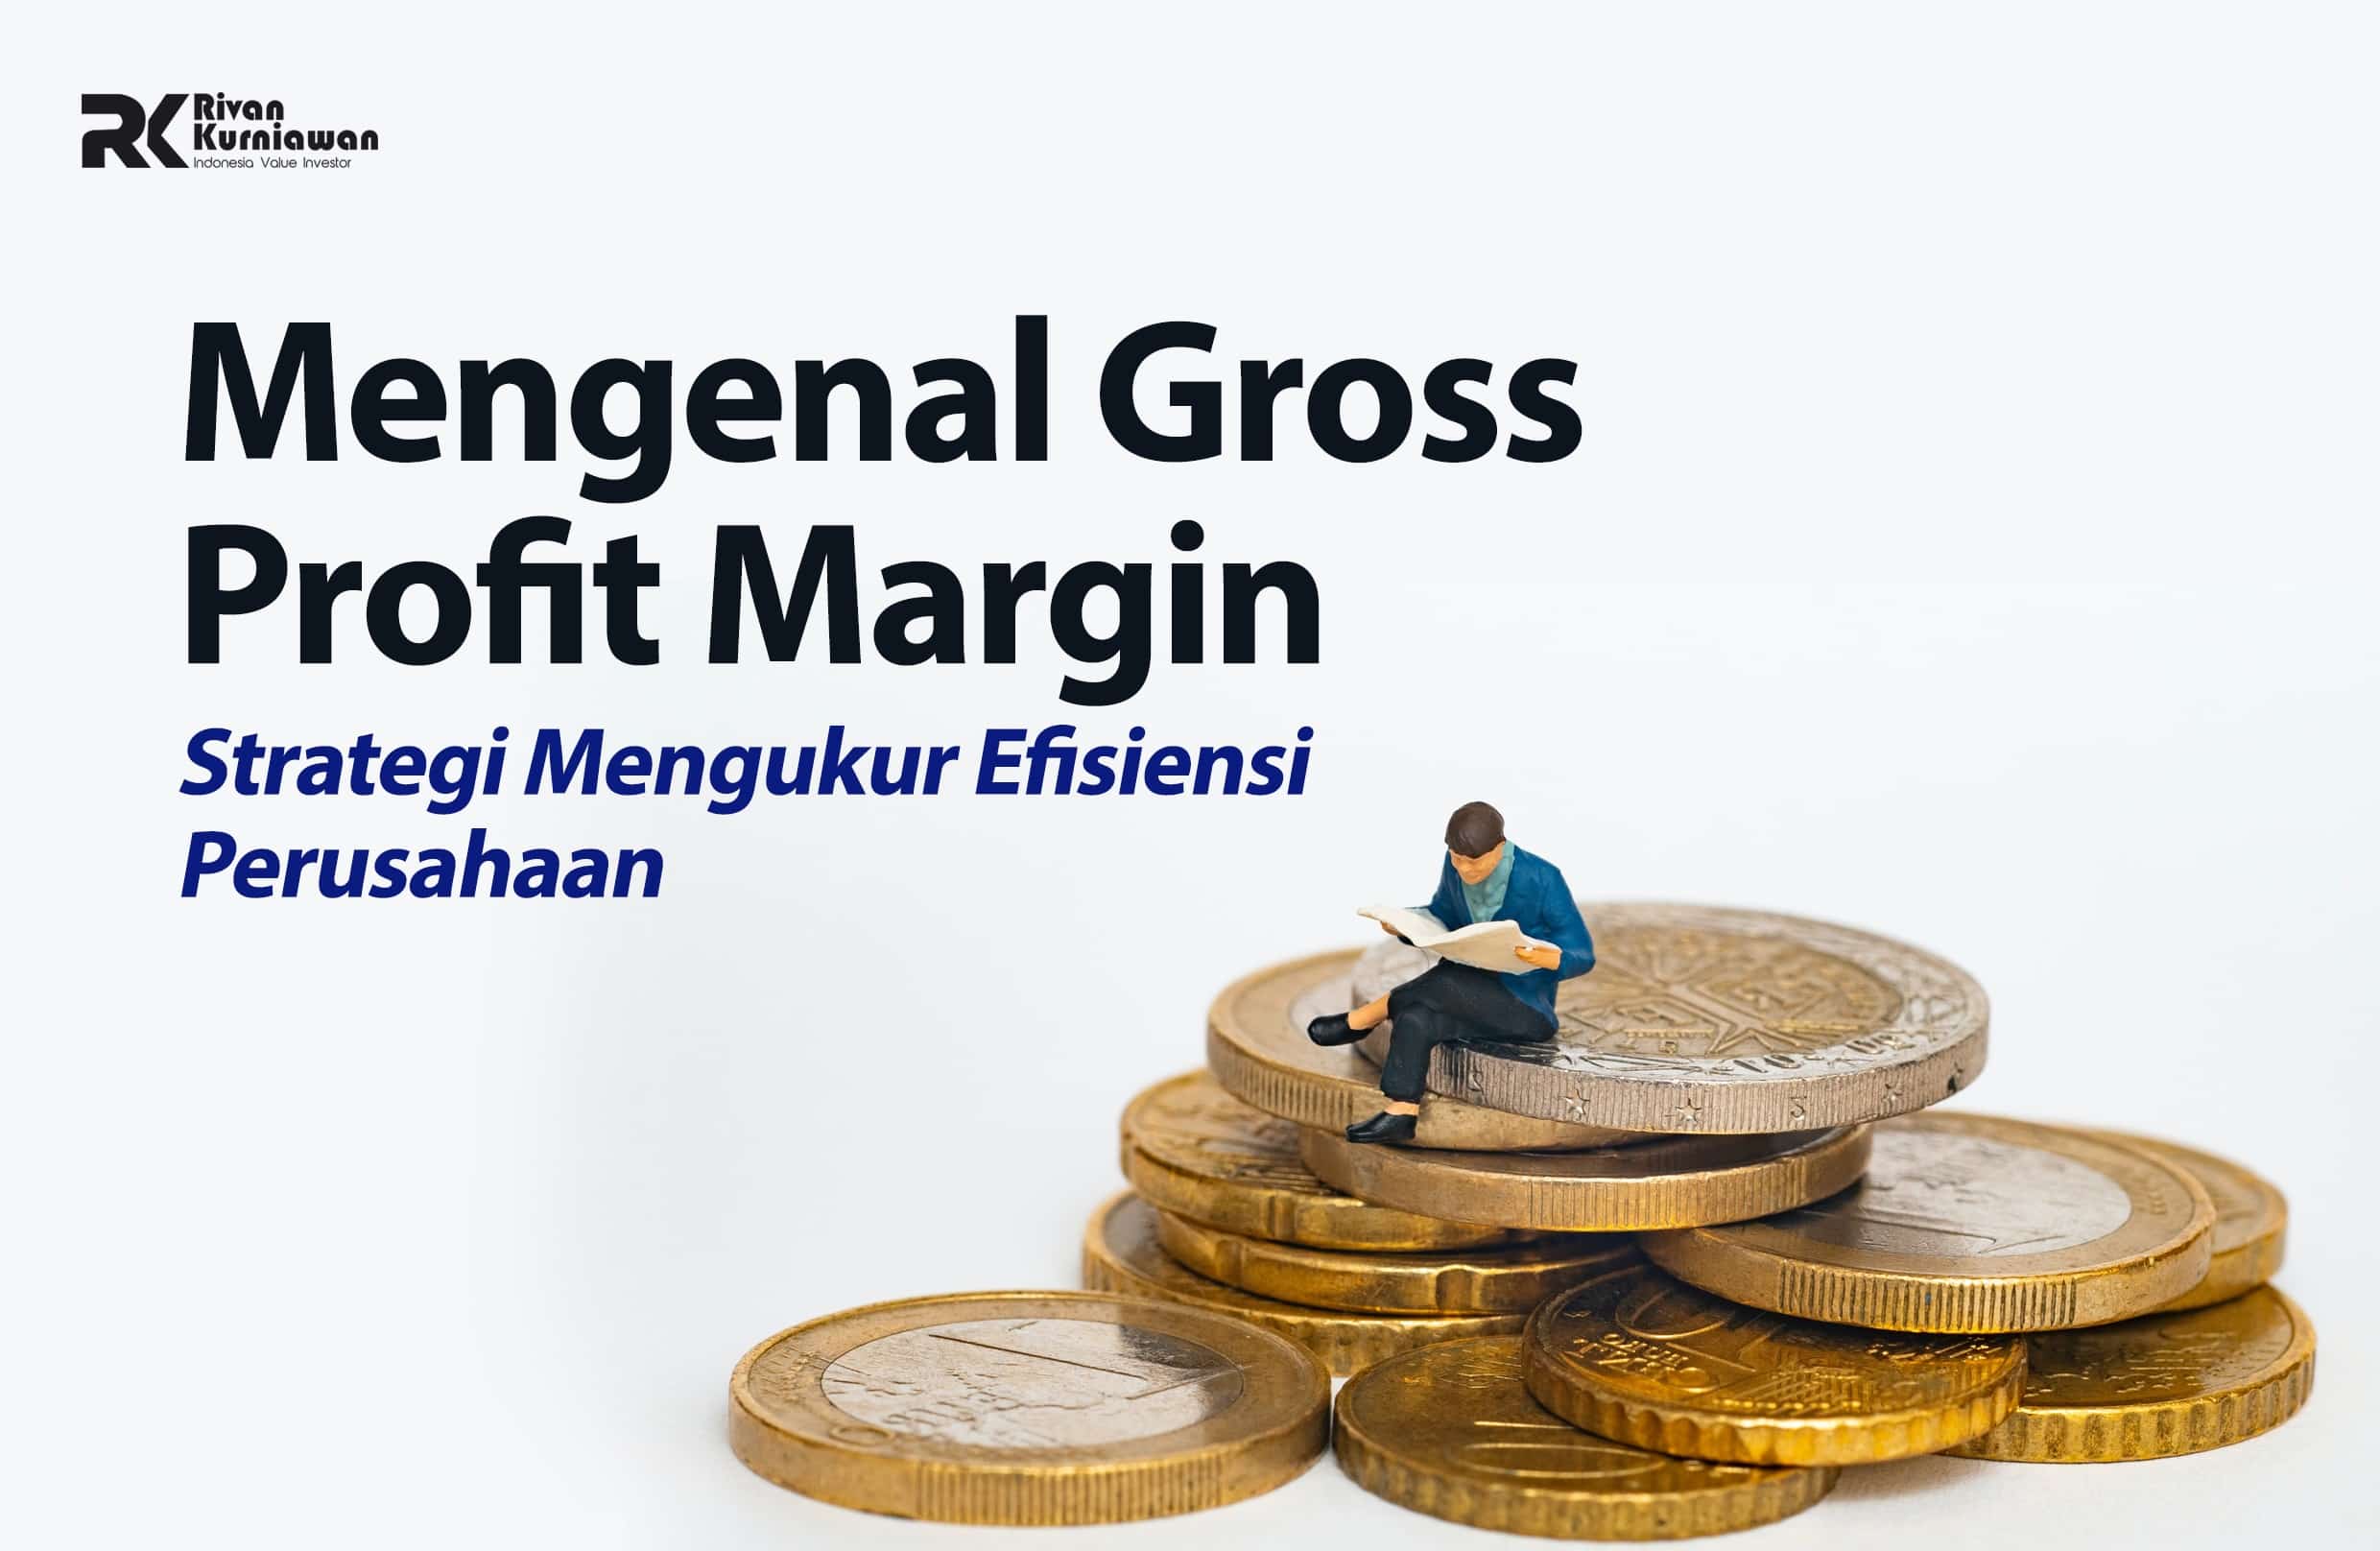 Mengenal-Gross-Profit Margin